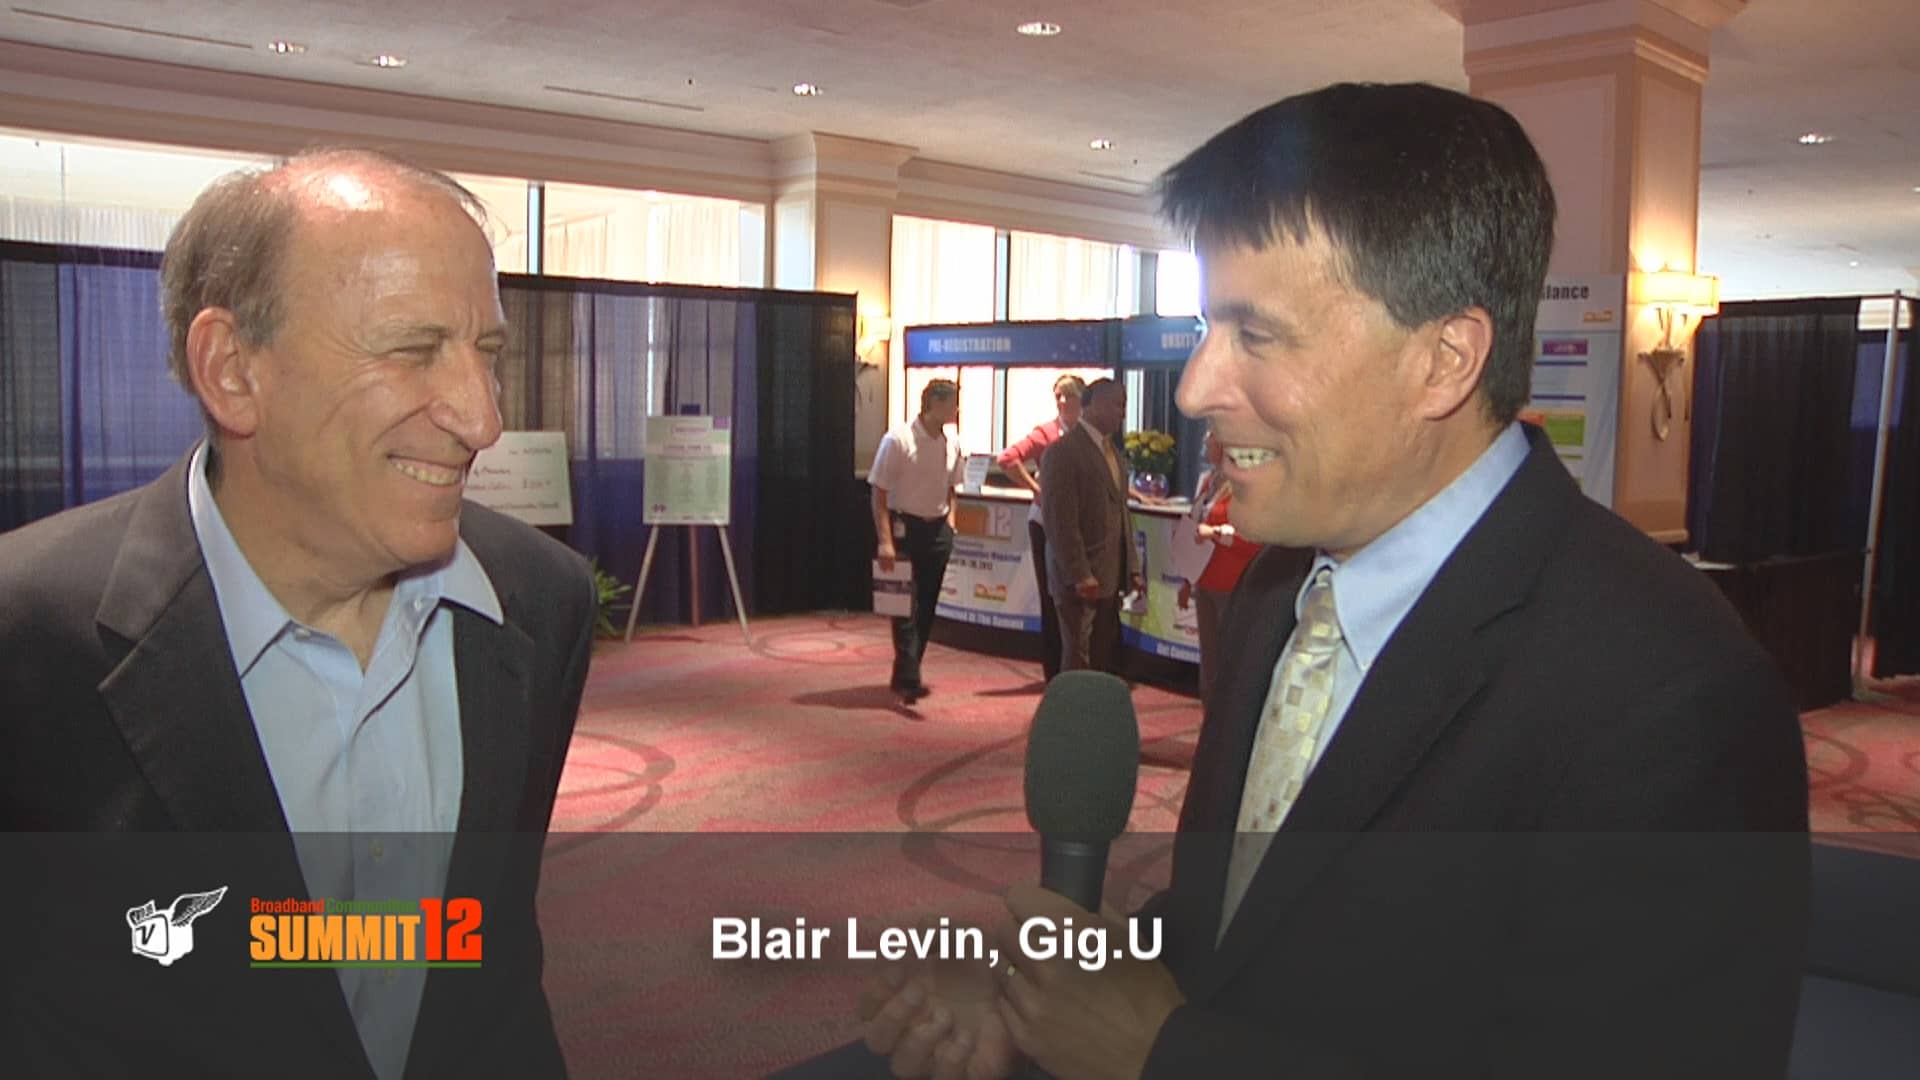 Blair Levin explains GigU.